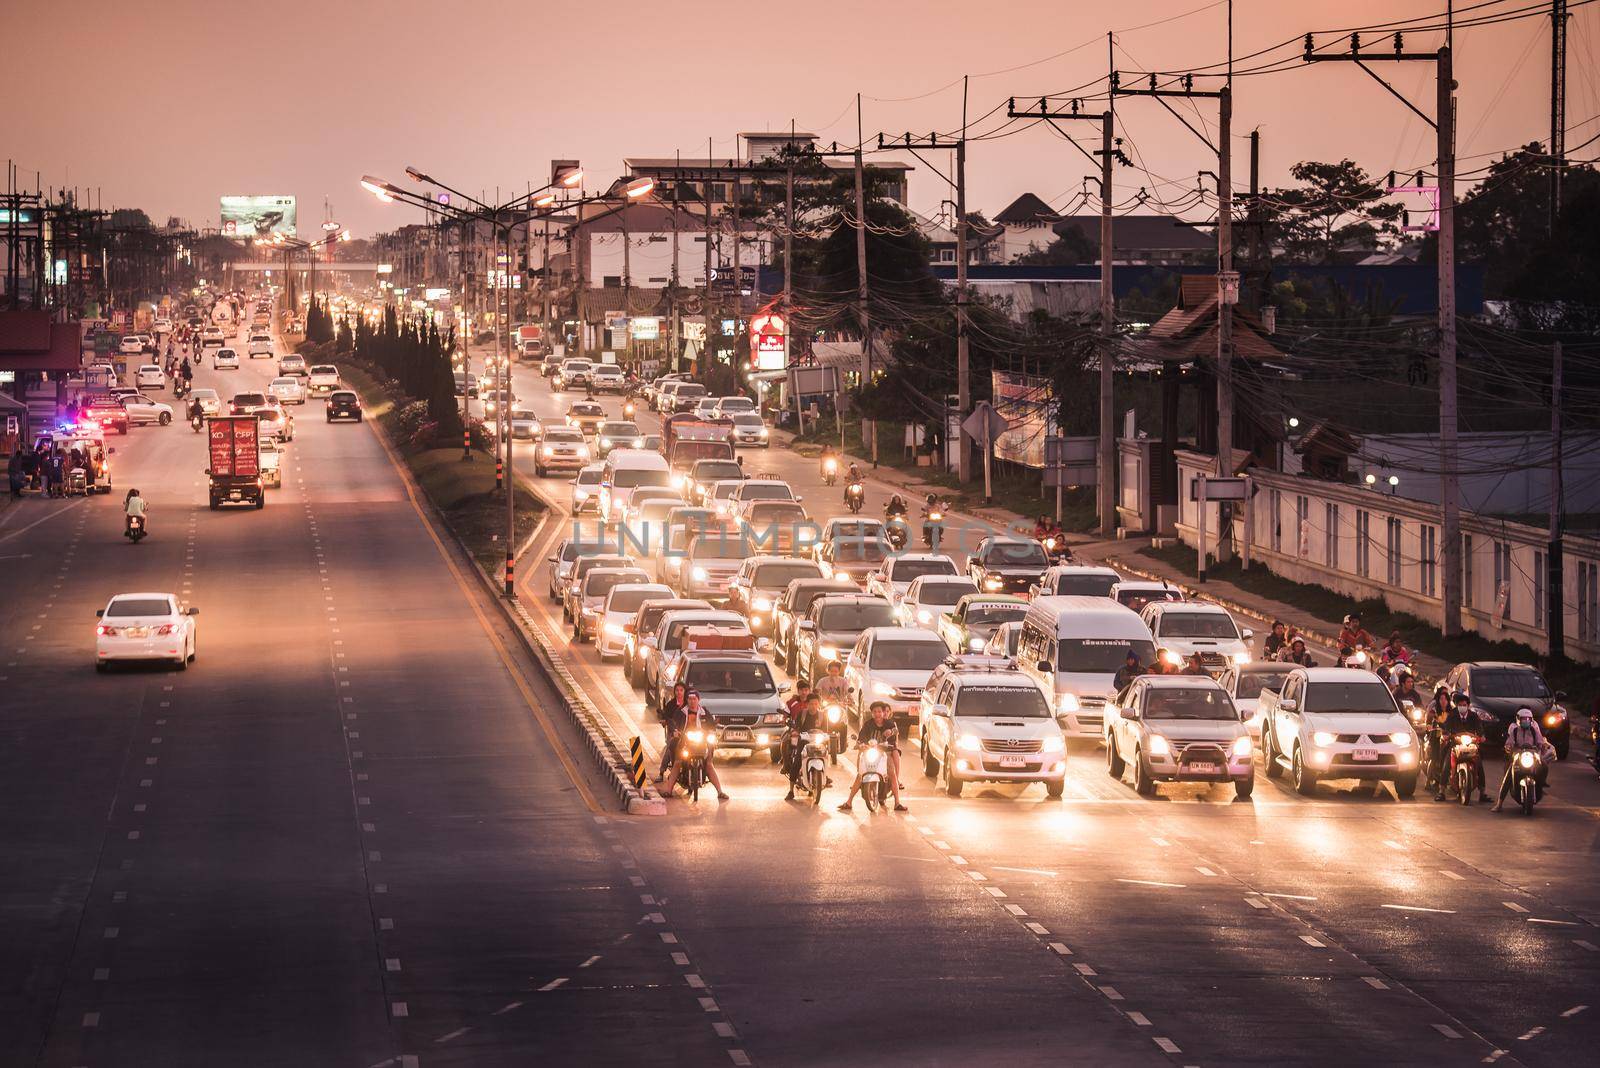 Thailand, Chiang rai - February 5 2016: Evening road traffic in Chiang rai